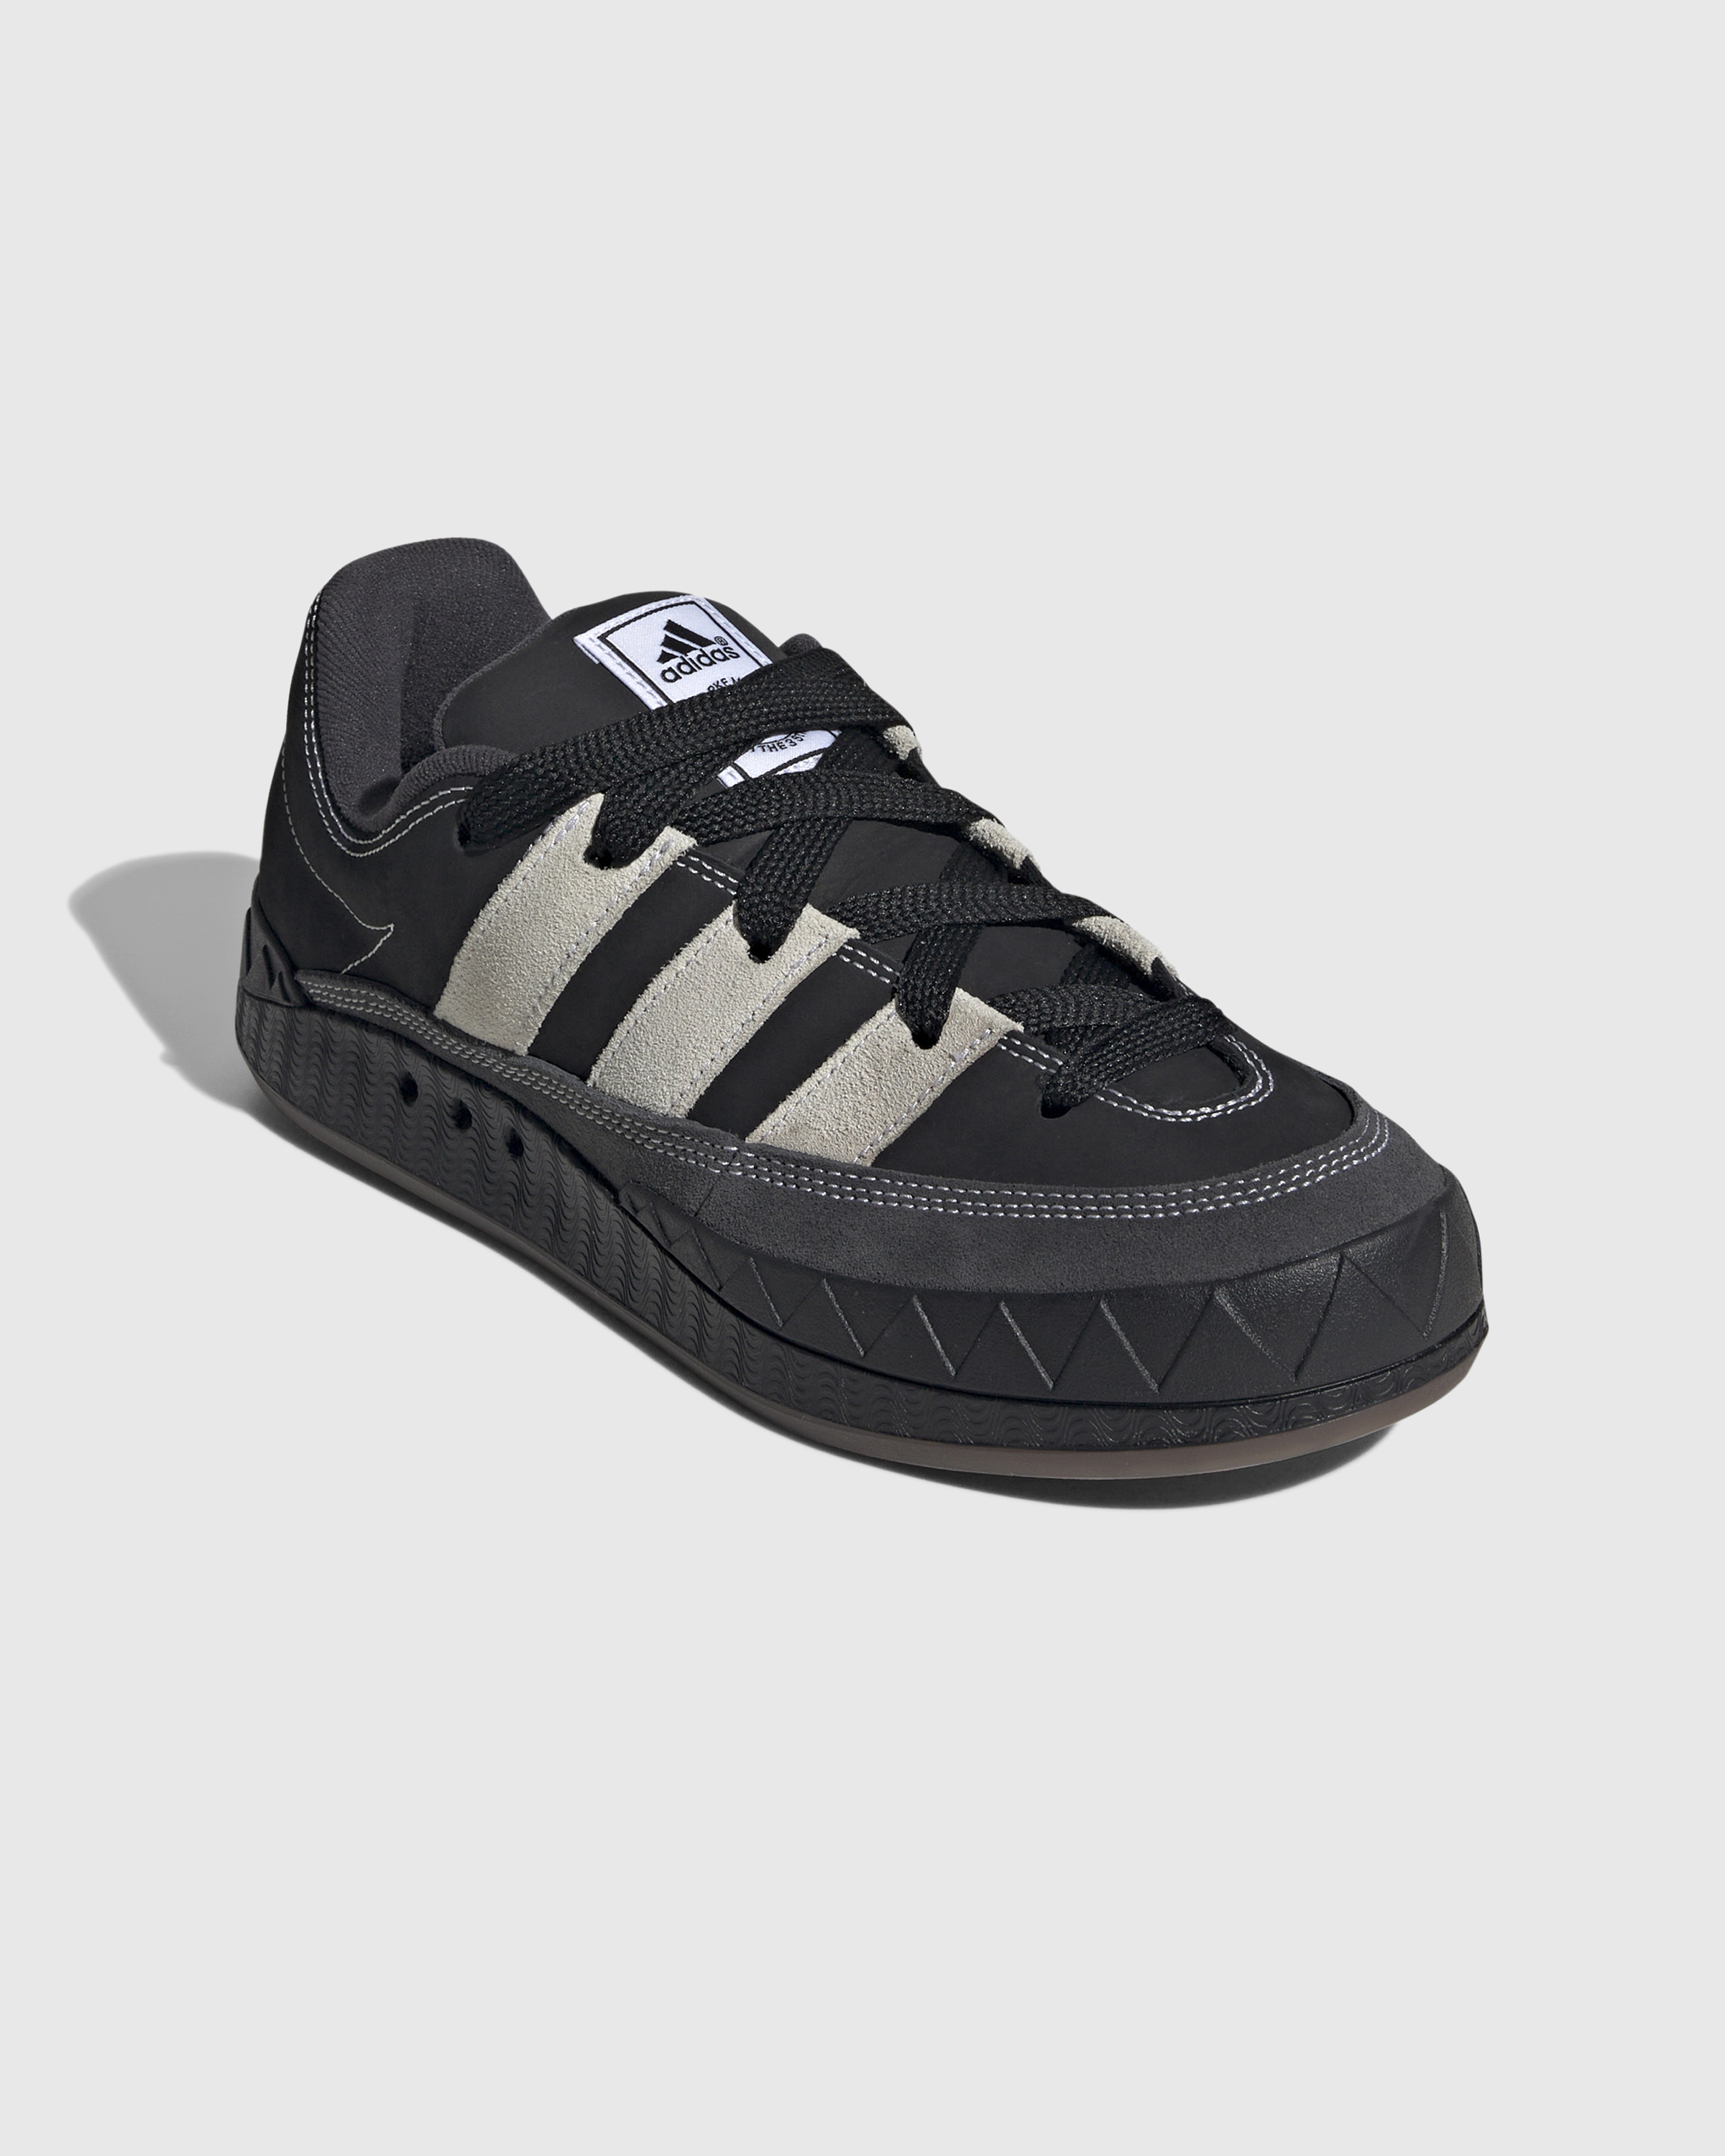 Adidas – Adimatic Black/White - Low Top Sneakers - Black - Image 3